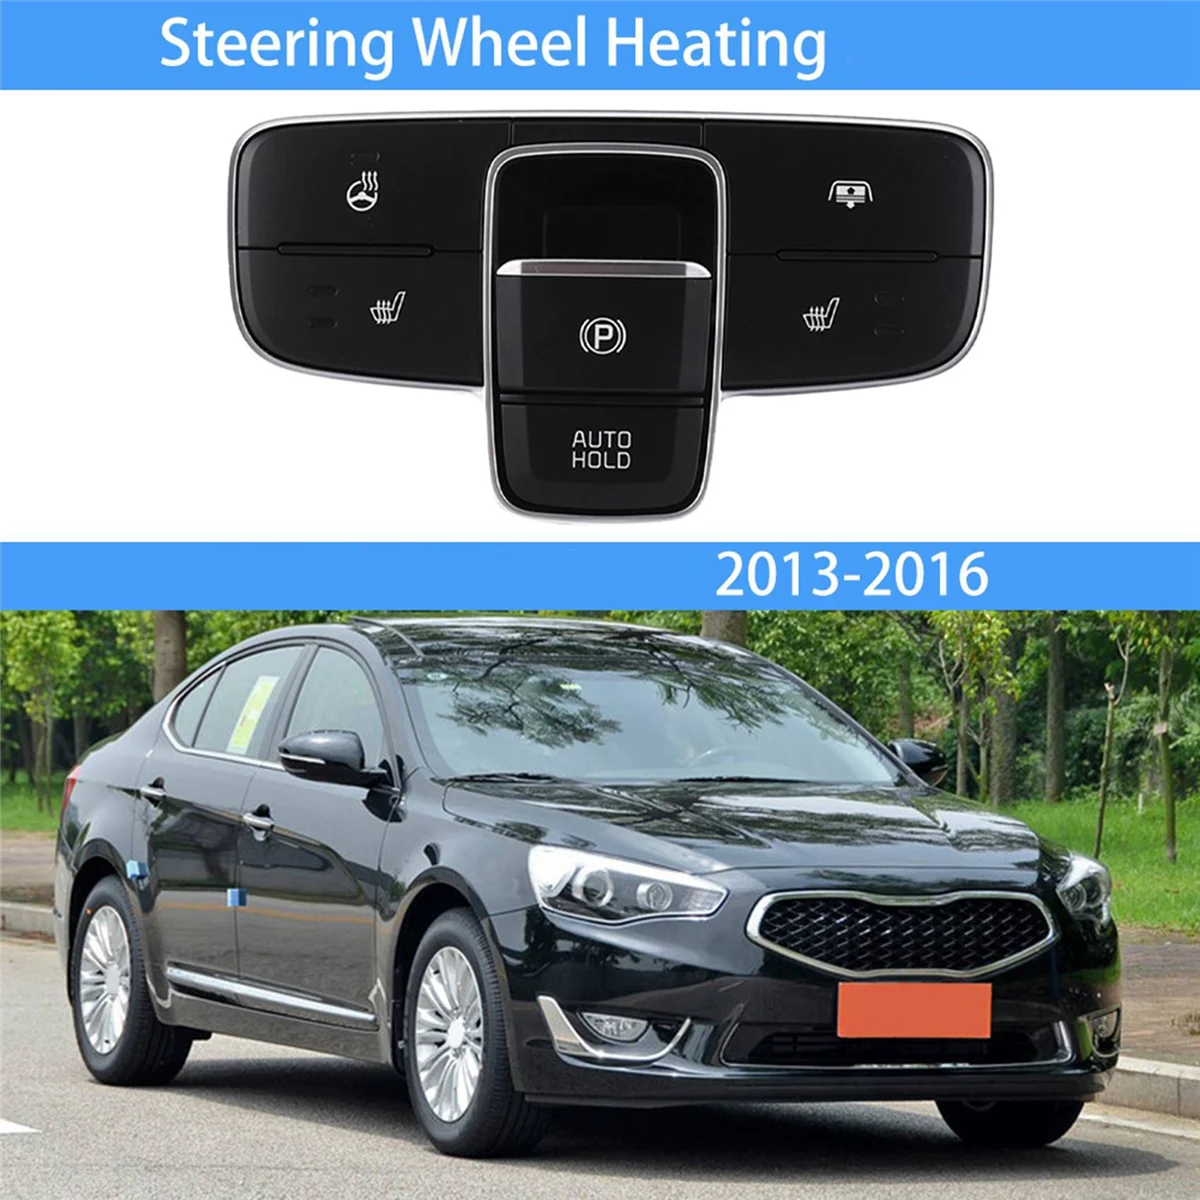 

933003RBB0 Car Electronic Handbrake Button Steering Wheel Heating Switch for Kia K7 Cadenza 2013-2016